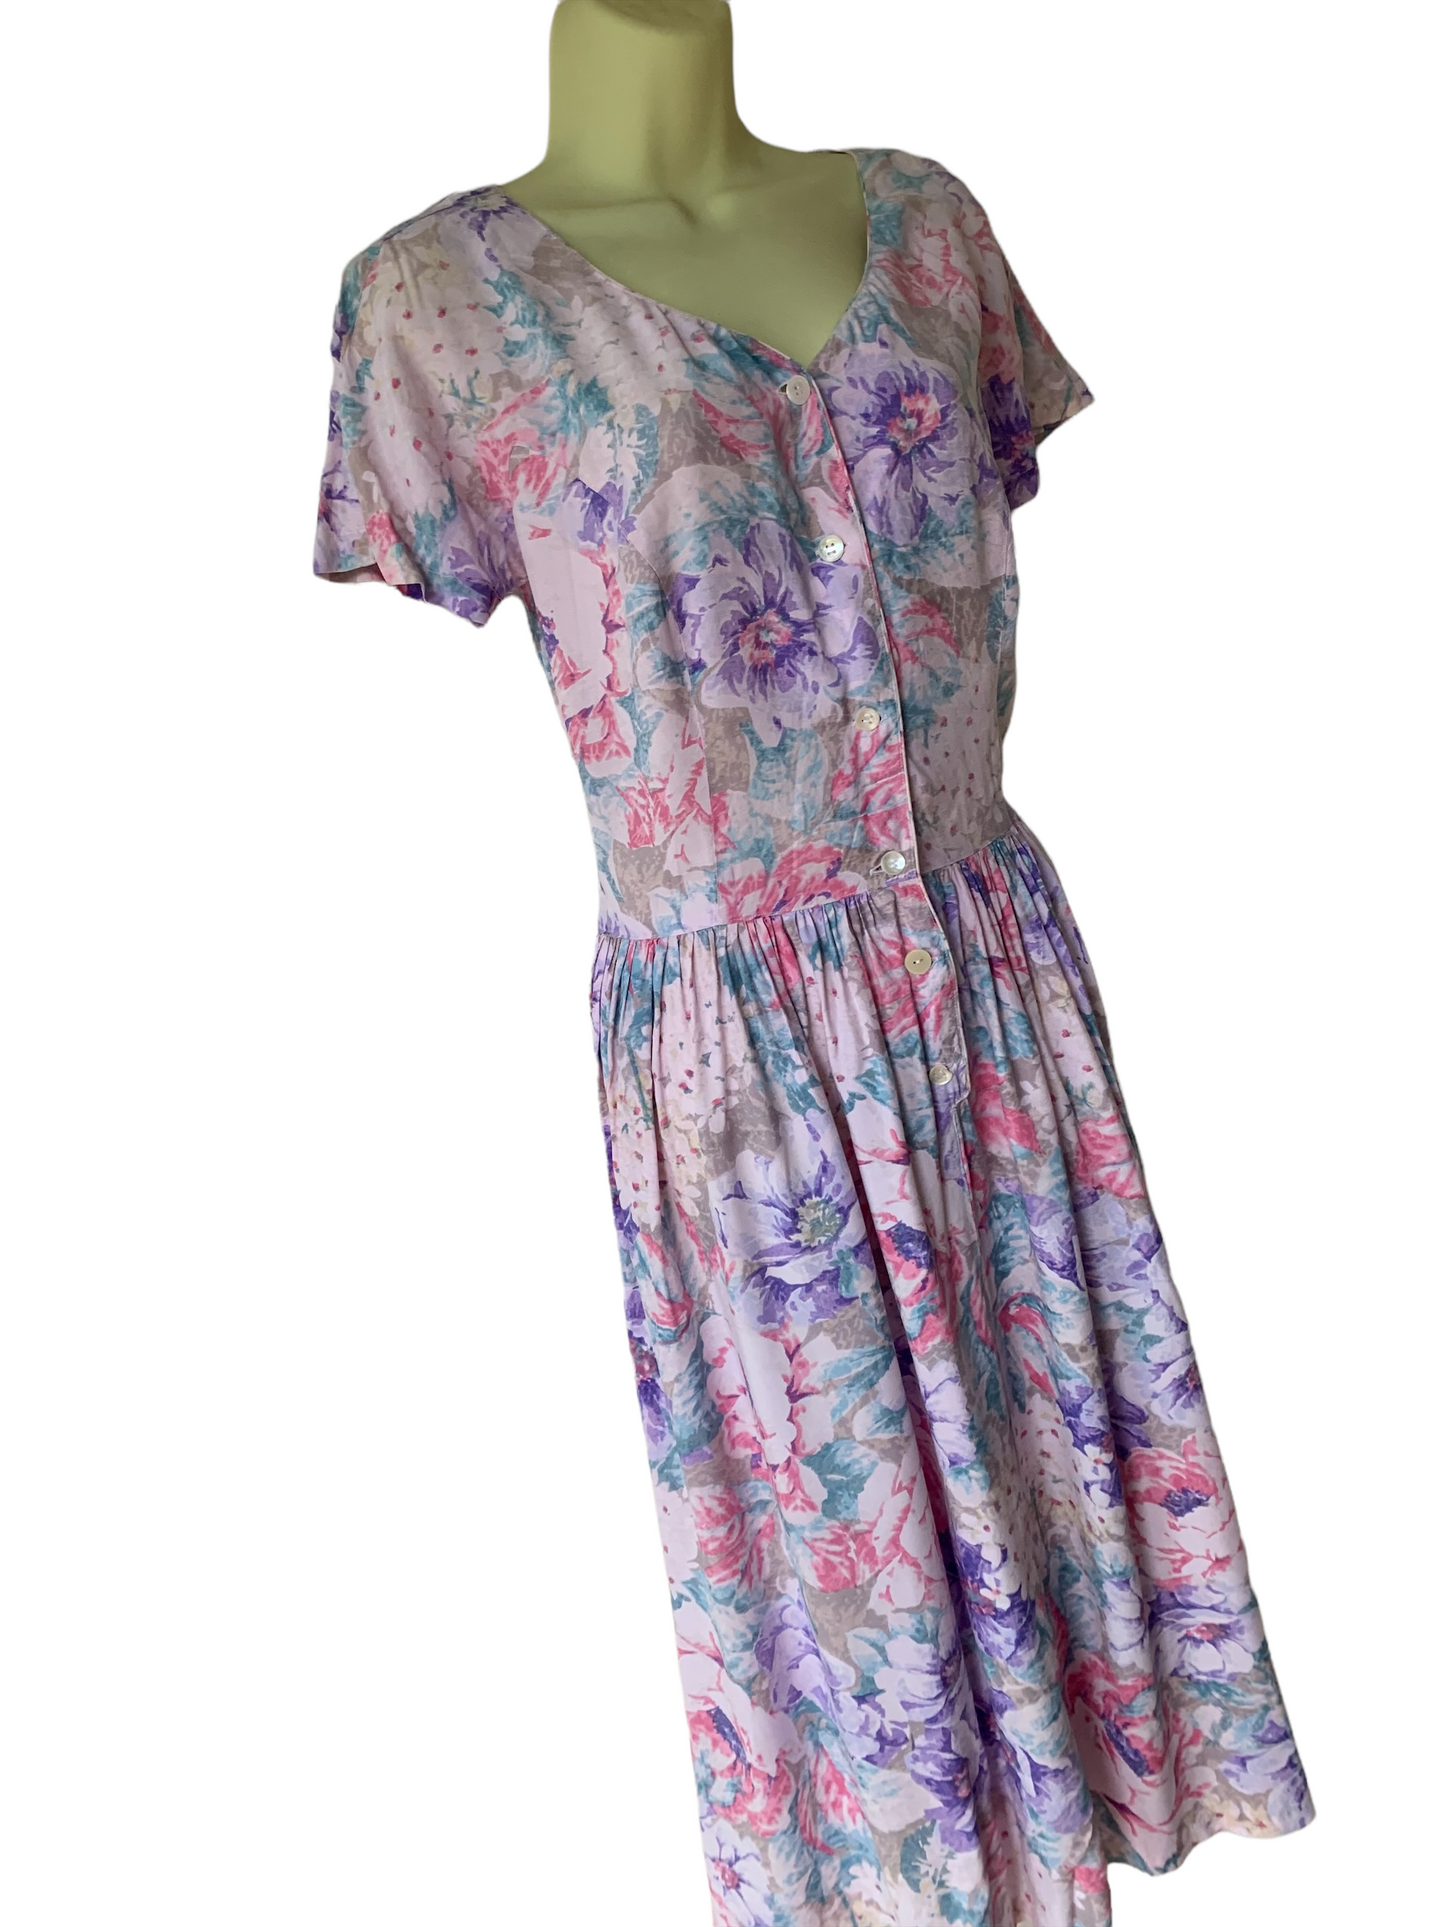 Vintage 1980s Cotton Summer Dress